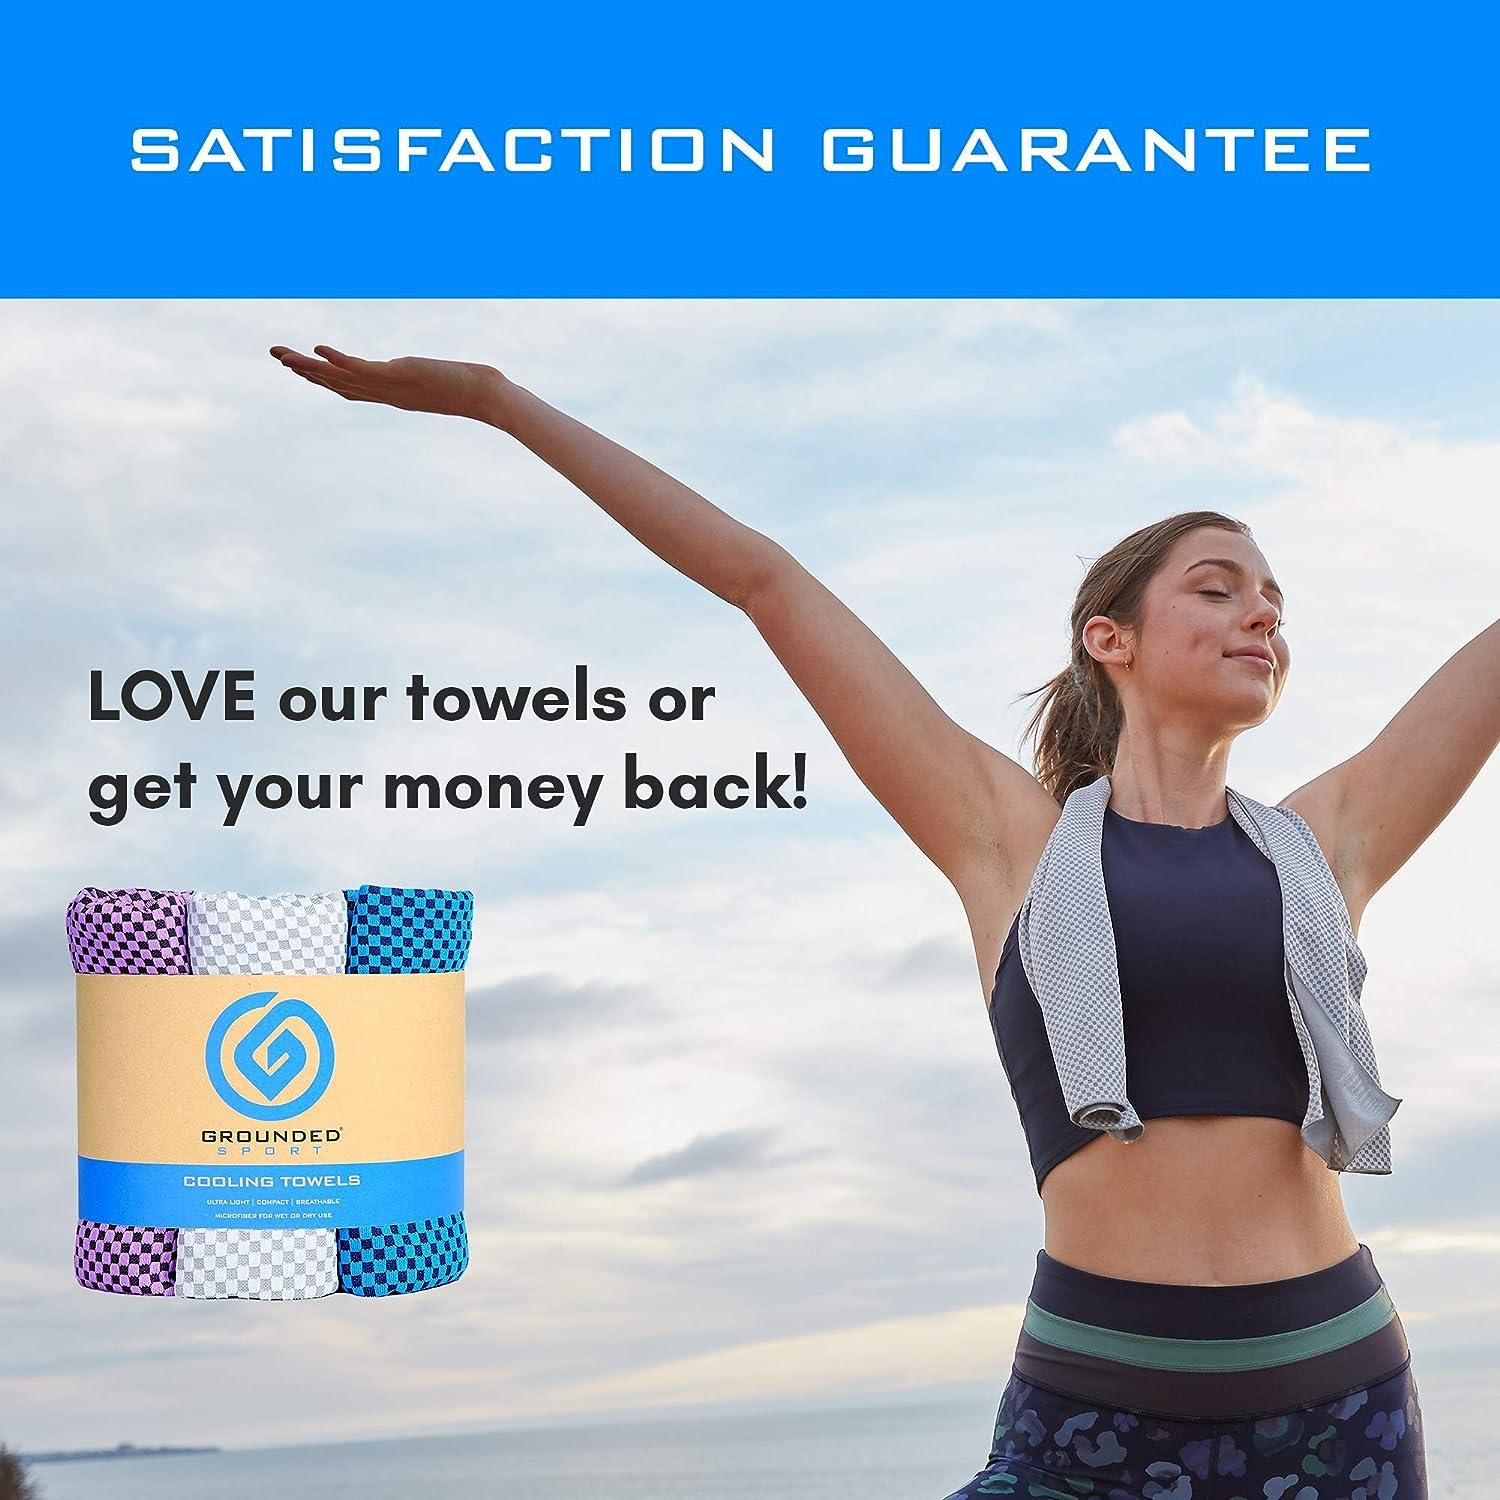 Cooling Towels 3 Pack - Lightweight Microfiber Towel for Gym